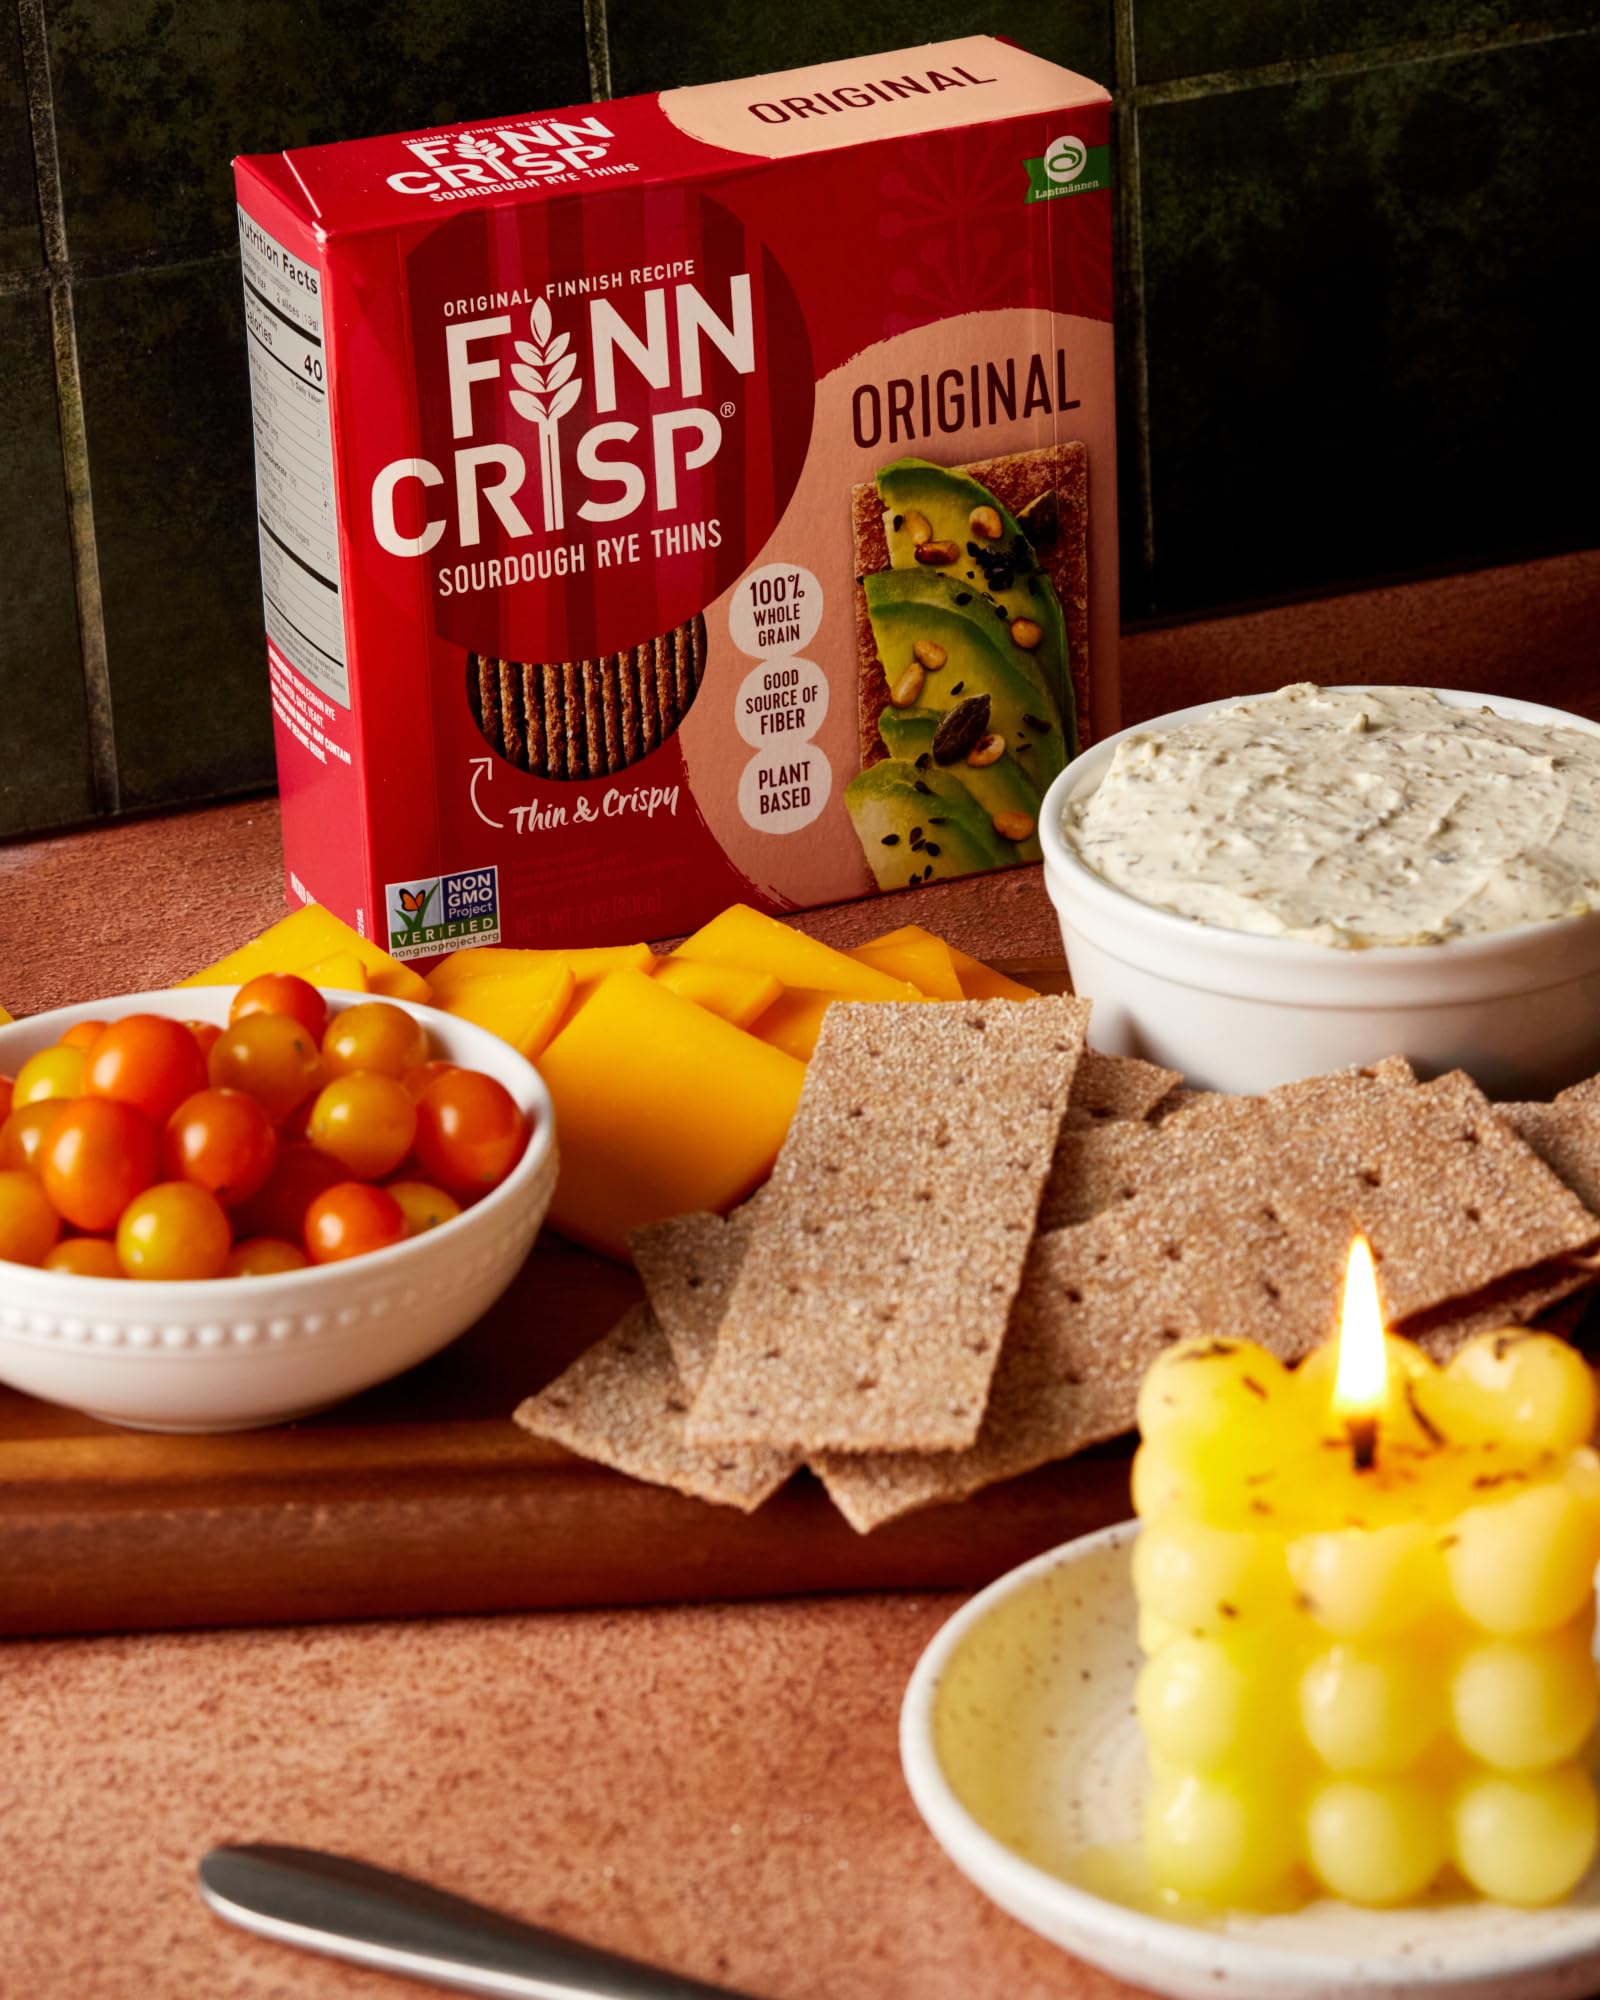 Finn Crisp Sourdough Rye Thins, Original Crispbread, 7 Ounce Boxes (Pack of 9)